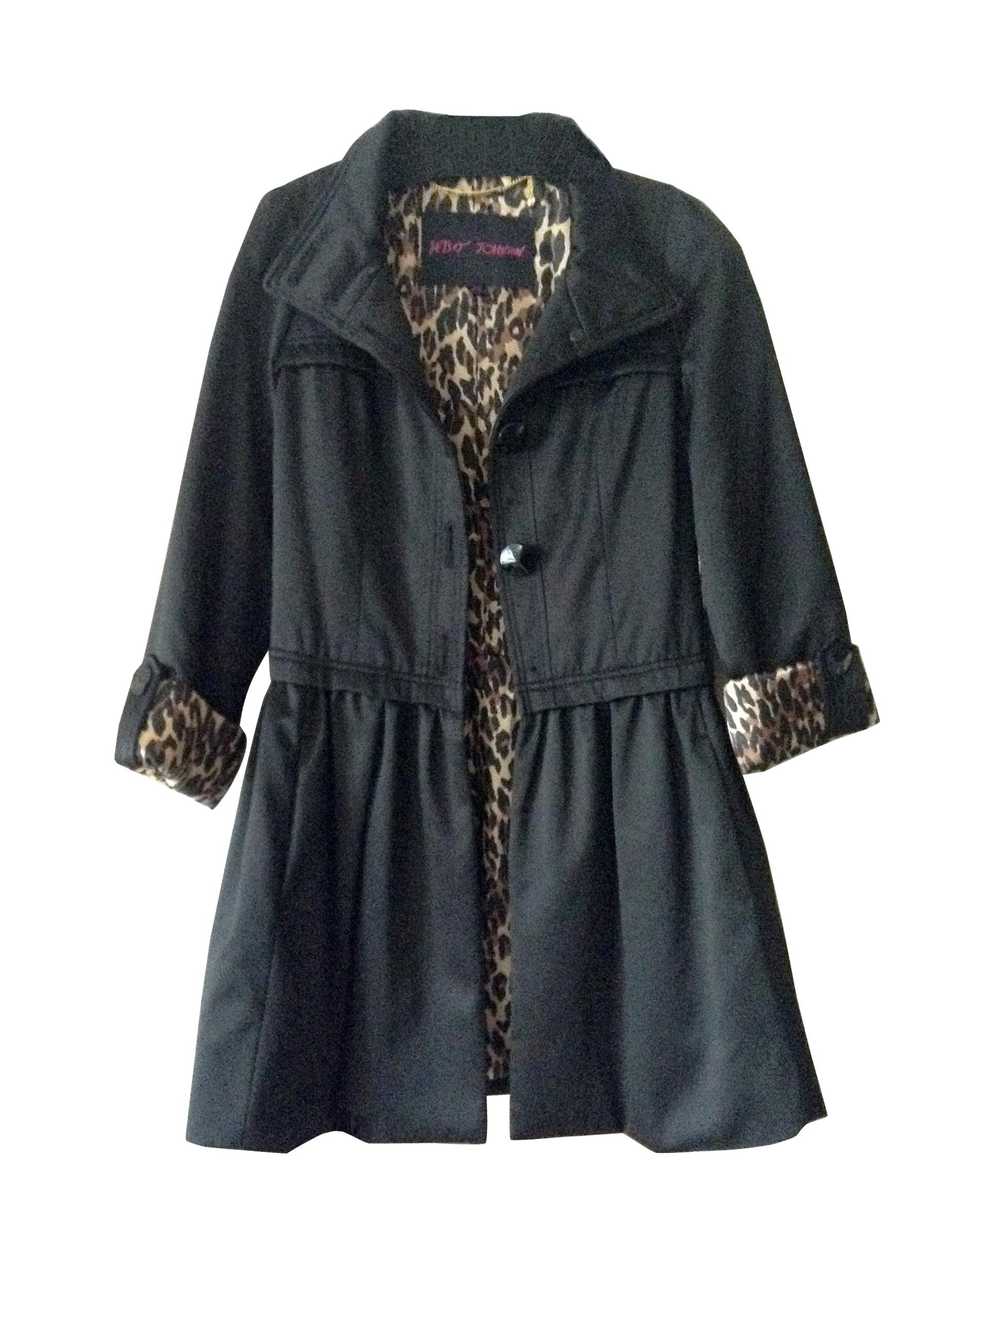 Other Designers Betsey Johnson satin trench coat - image 1